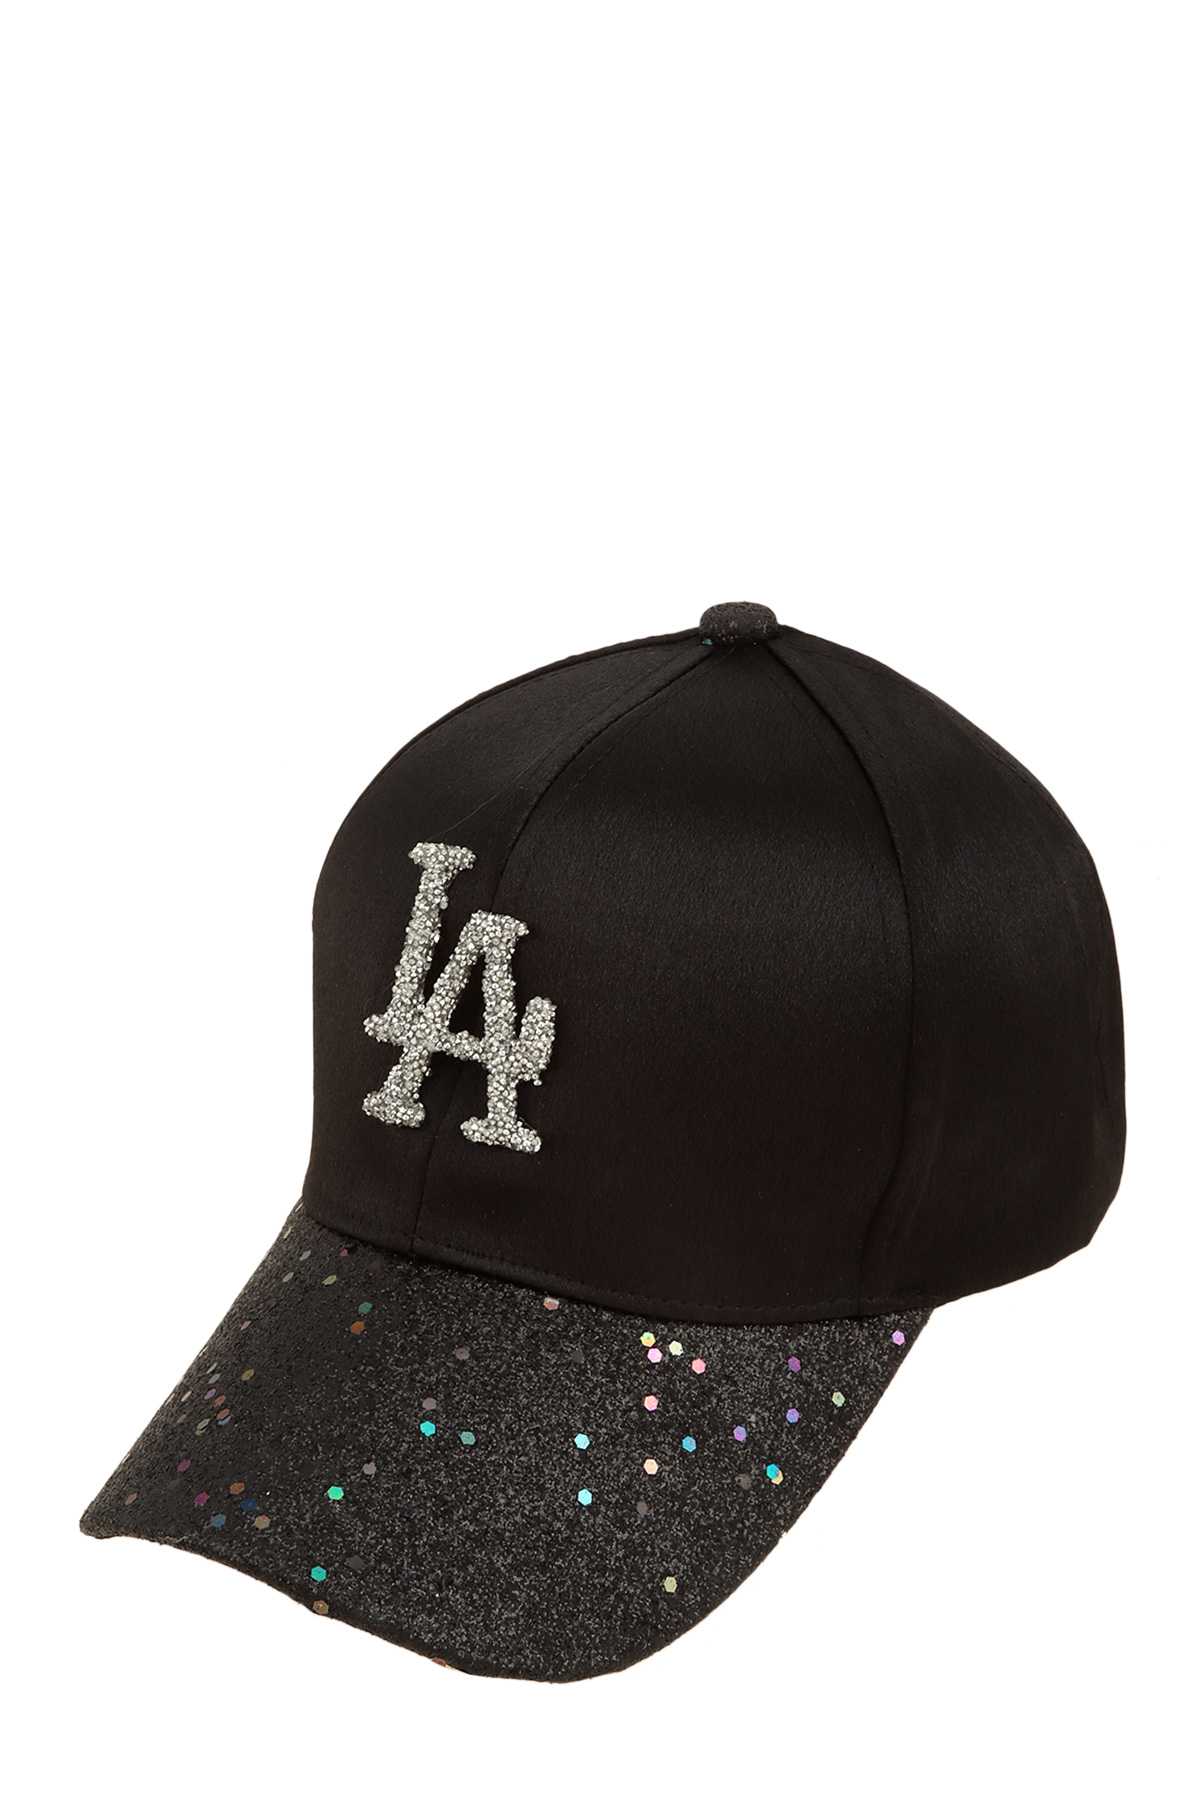 Rhinestone LA Charm Sparkle Baseball Cap